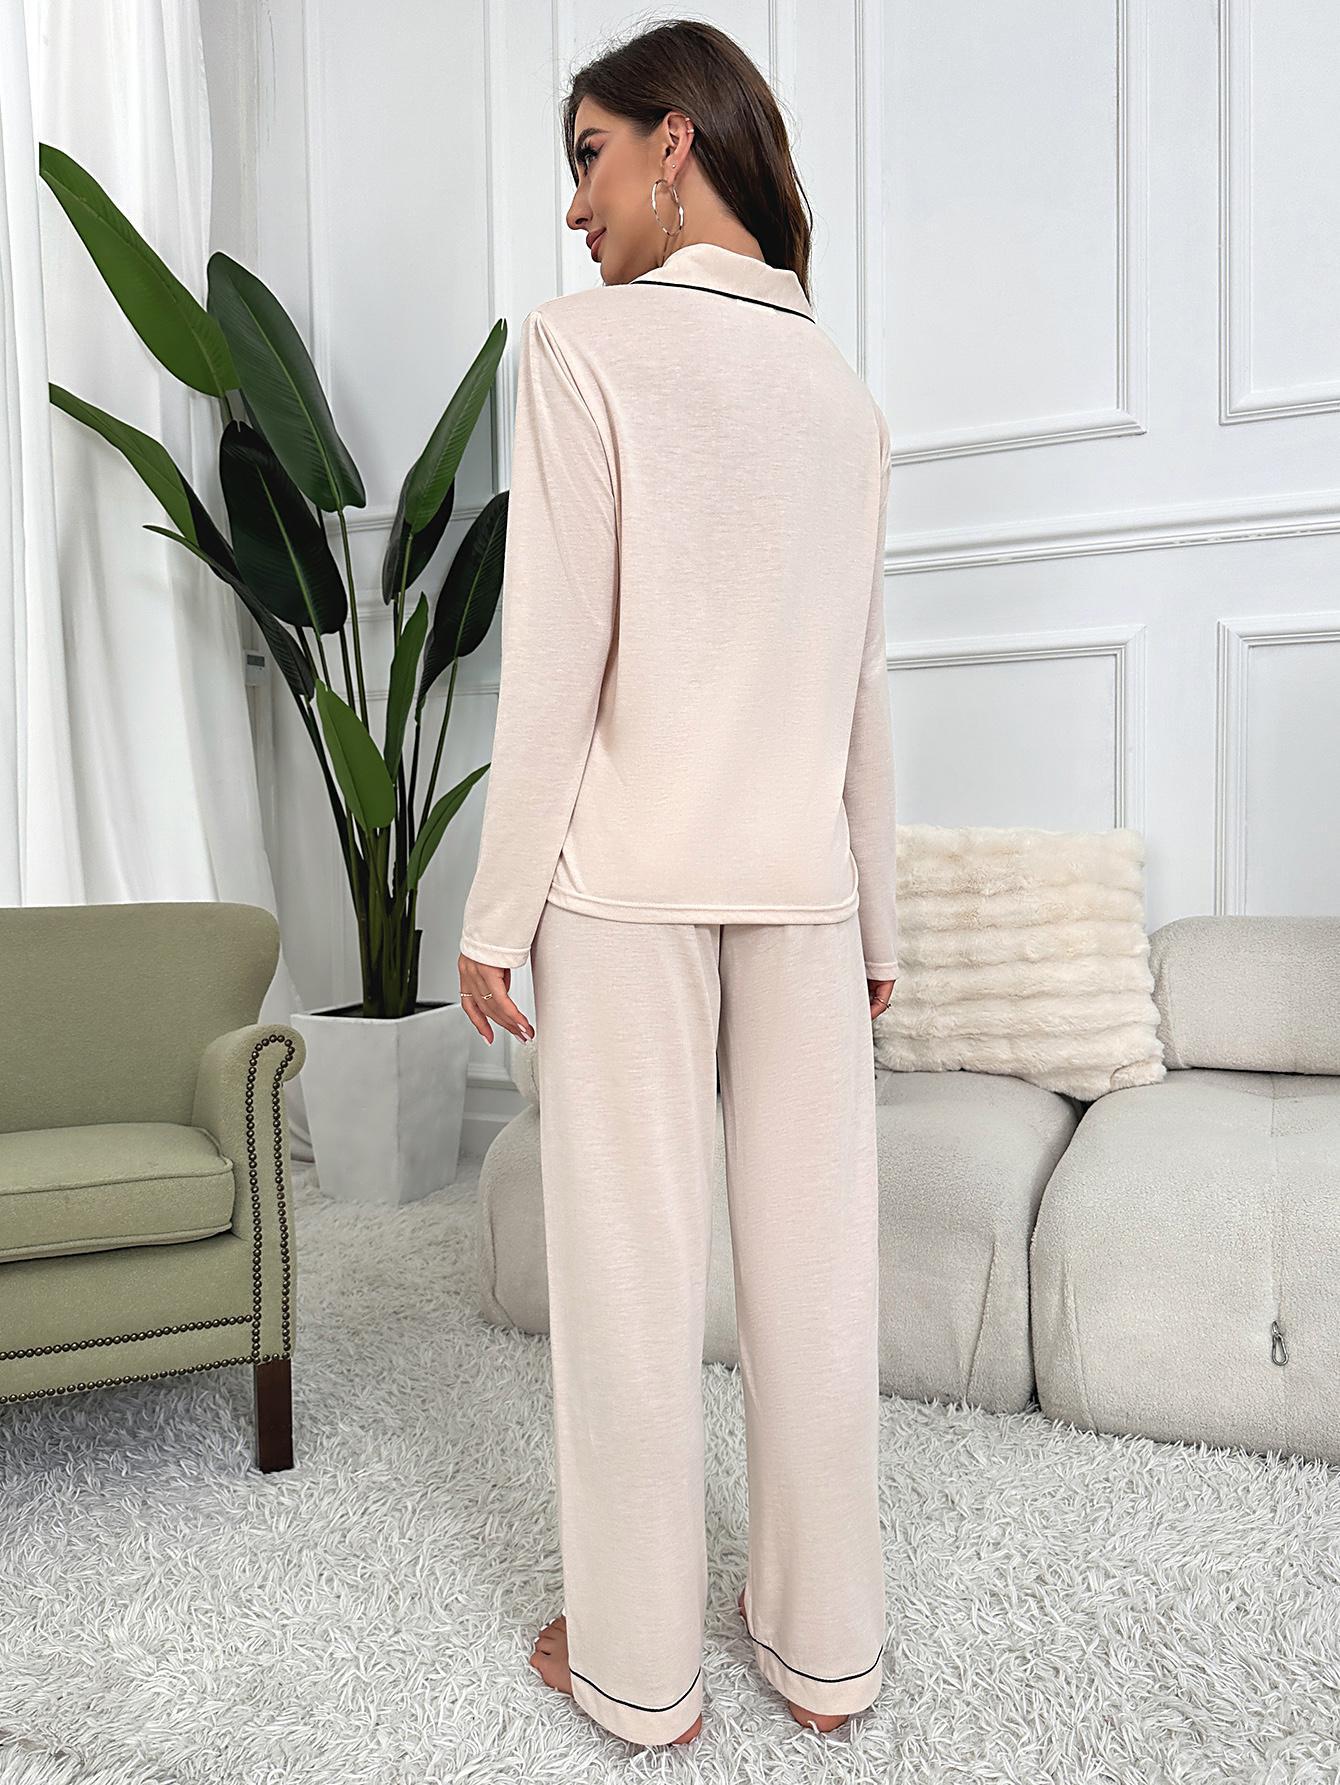 Women's solid color cardigan long-sleeved loungewear